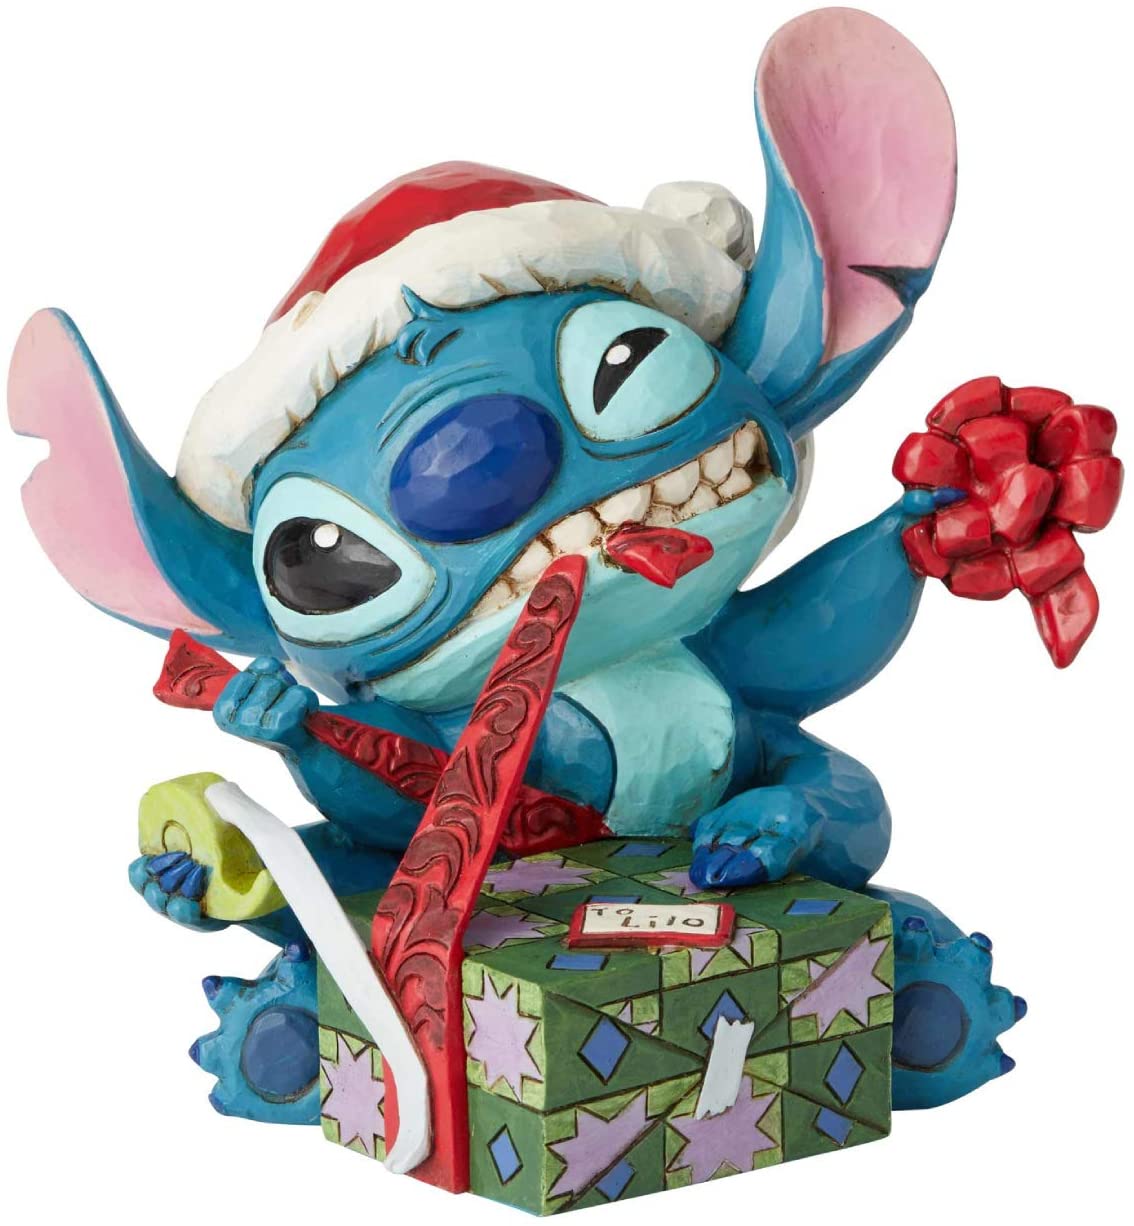 Disney Traditions Santa Stitch Wrapping Present Statue